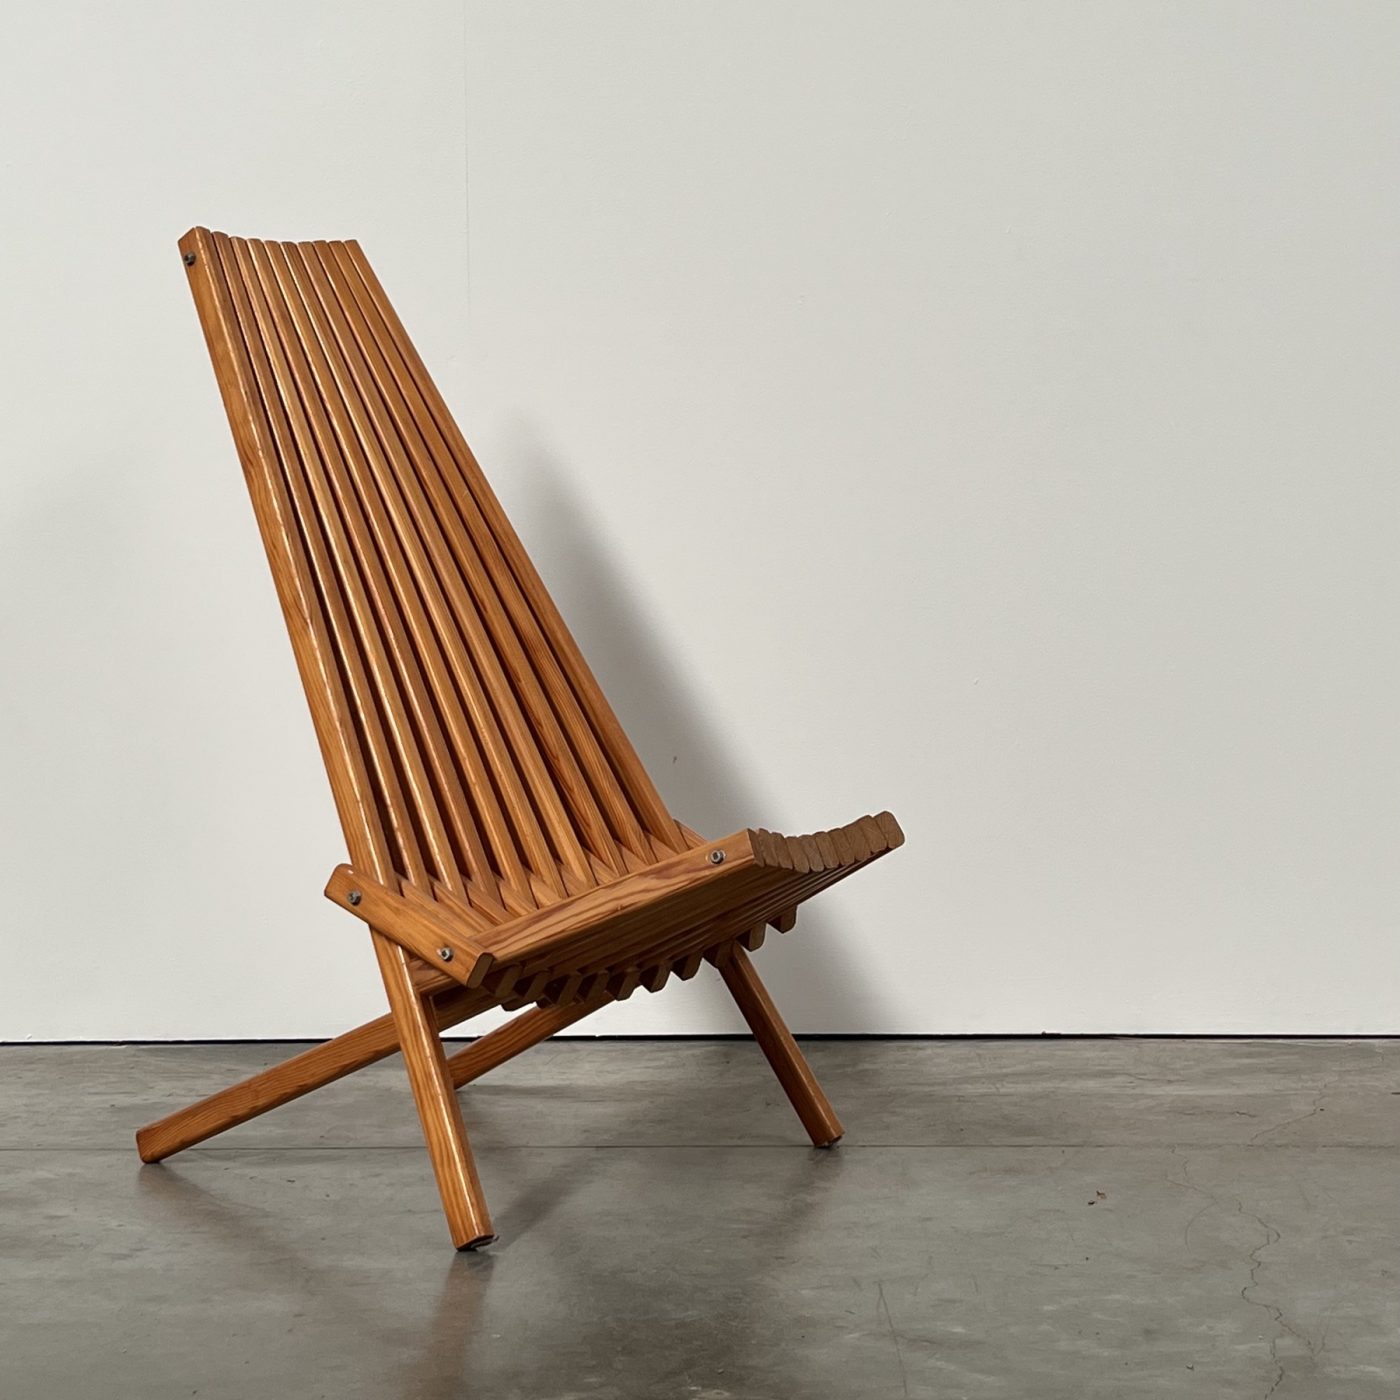 objet-vagabond-folding-chair0010